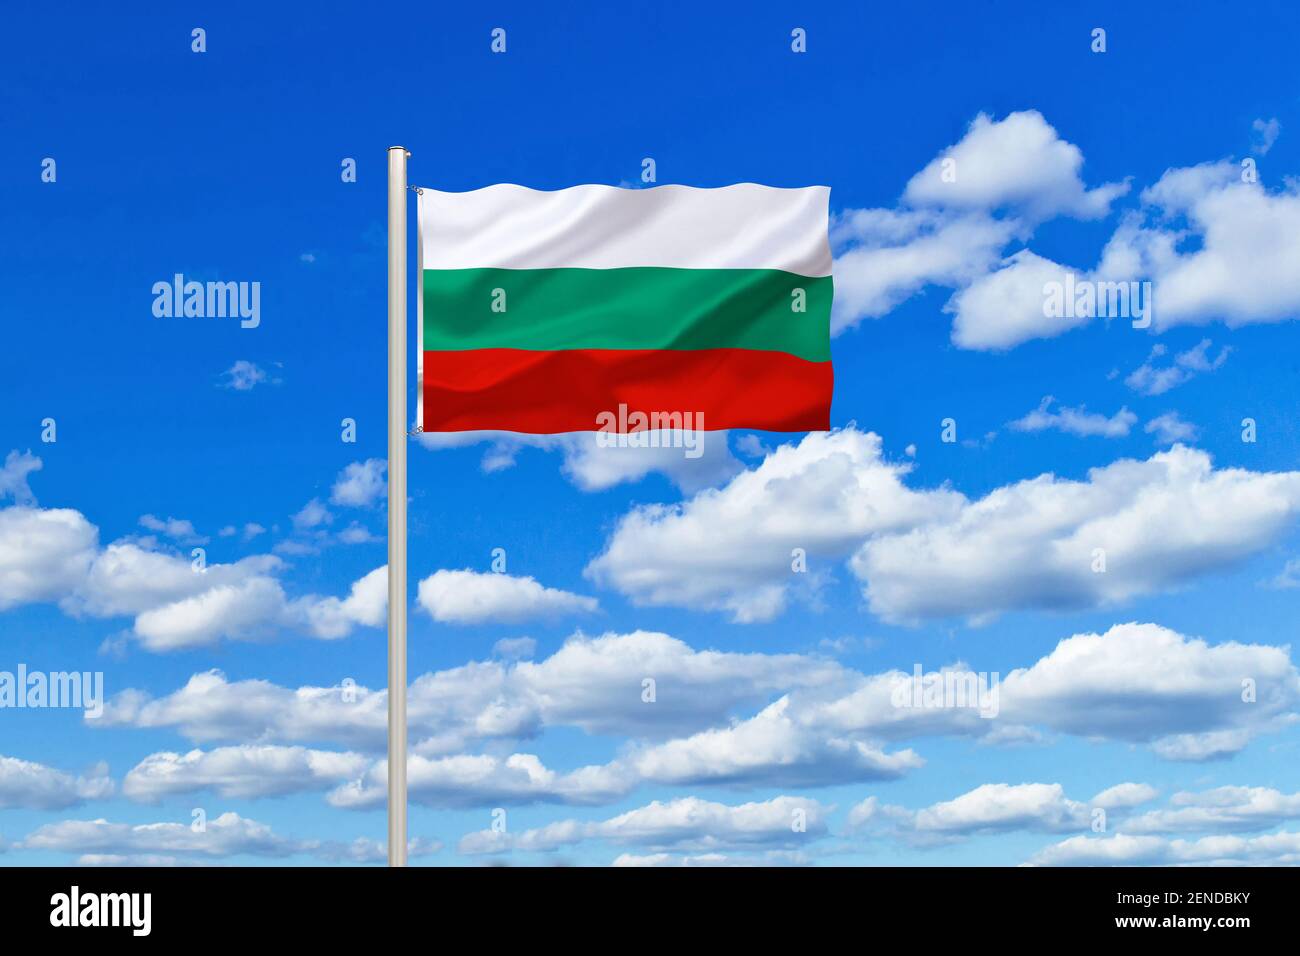 Flagge von Bulgarien, blauer Himmel, Cumulus Wolken, Republik in Südosteuropa, Balkan, Balkanhalbinsel, Stock Photo